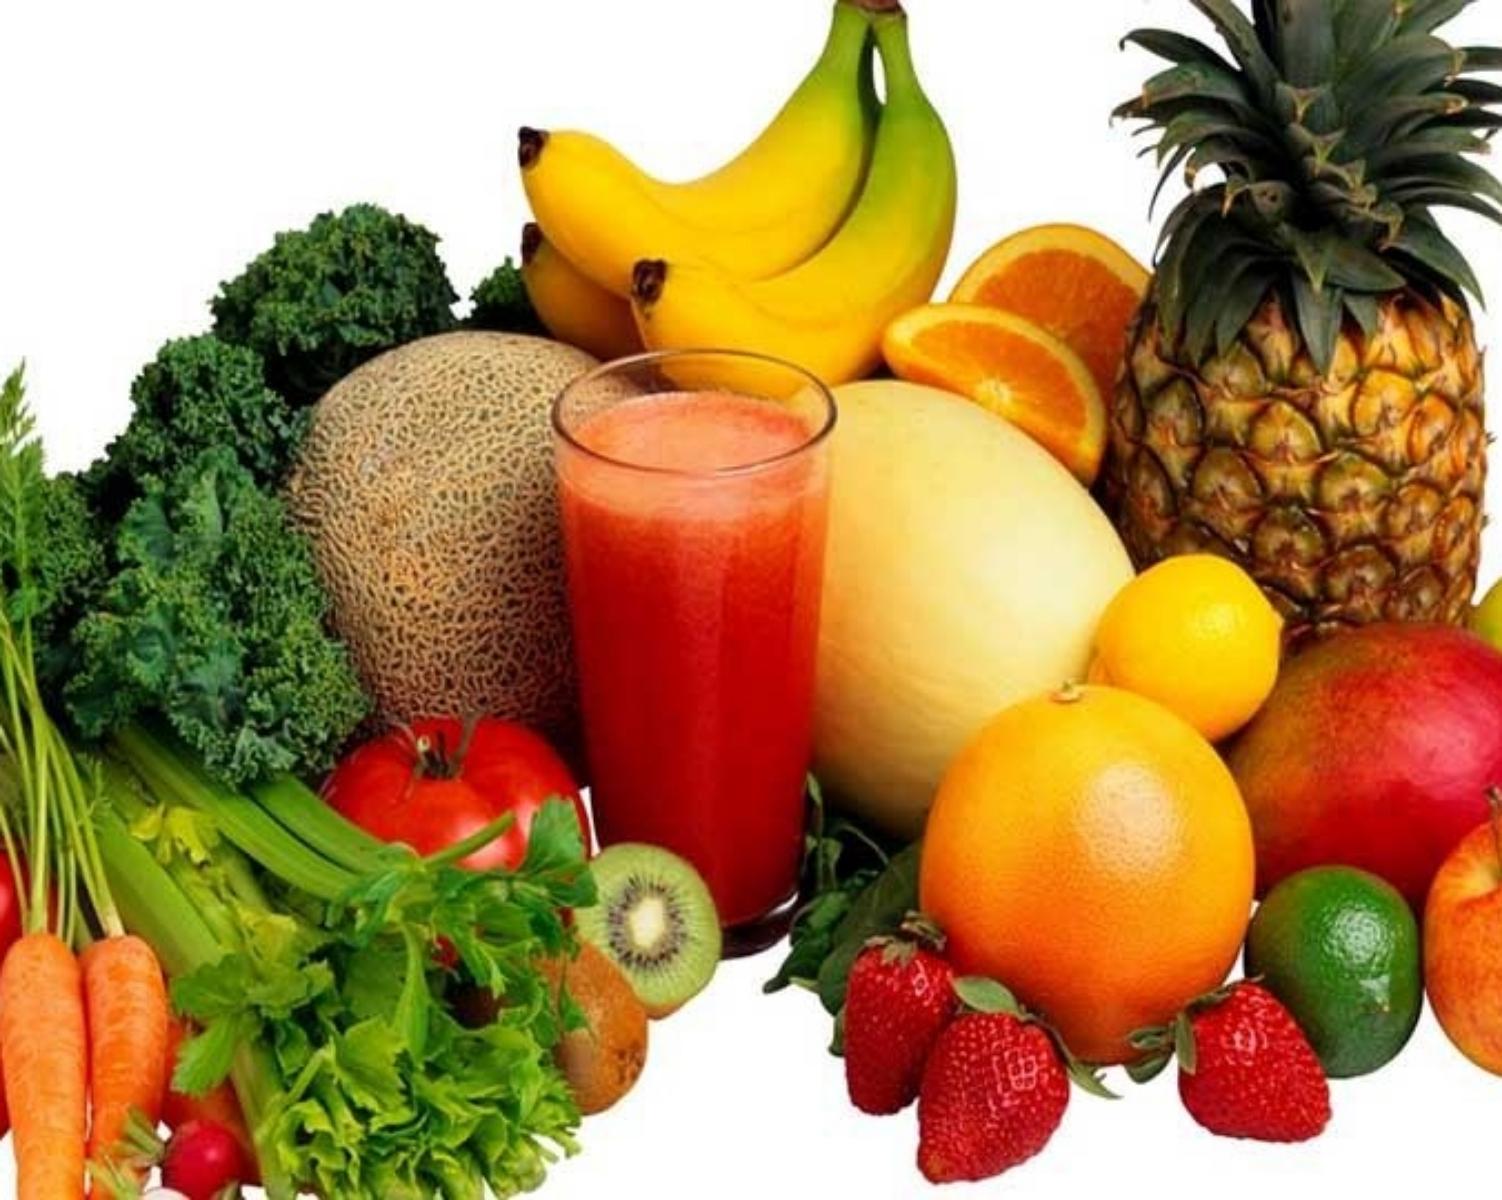 4. Enjoy plenty of fruits and vegetables